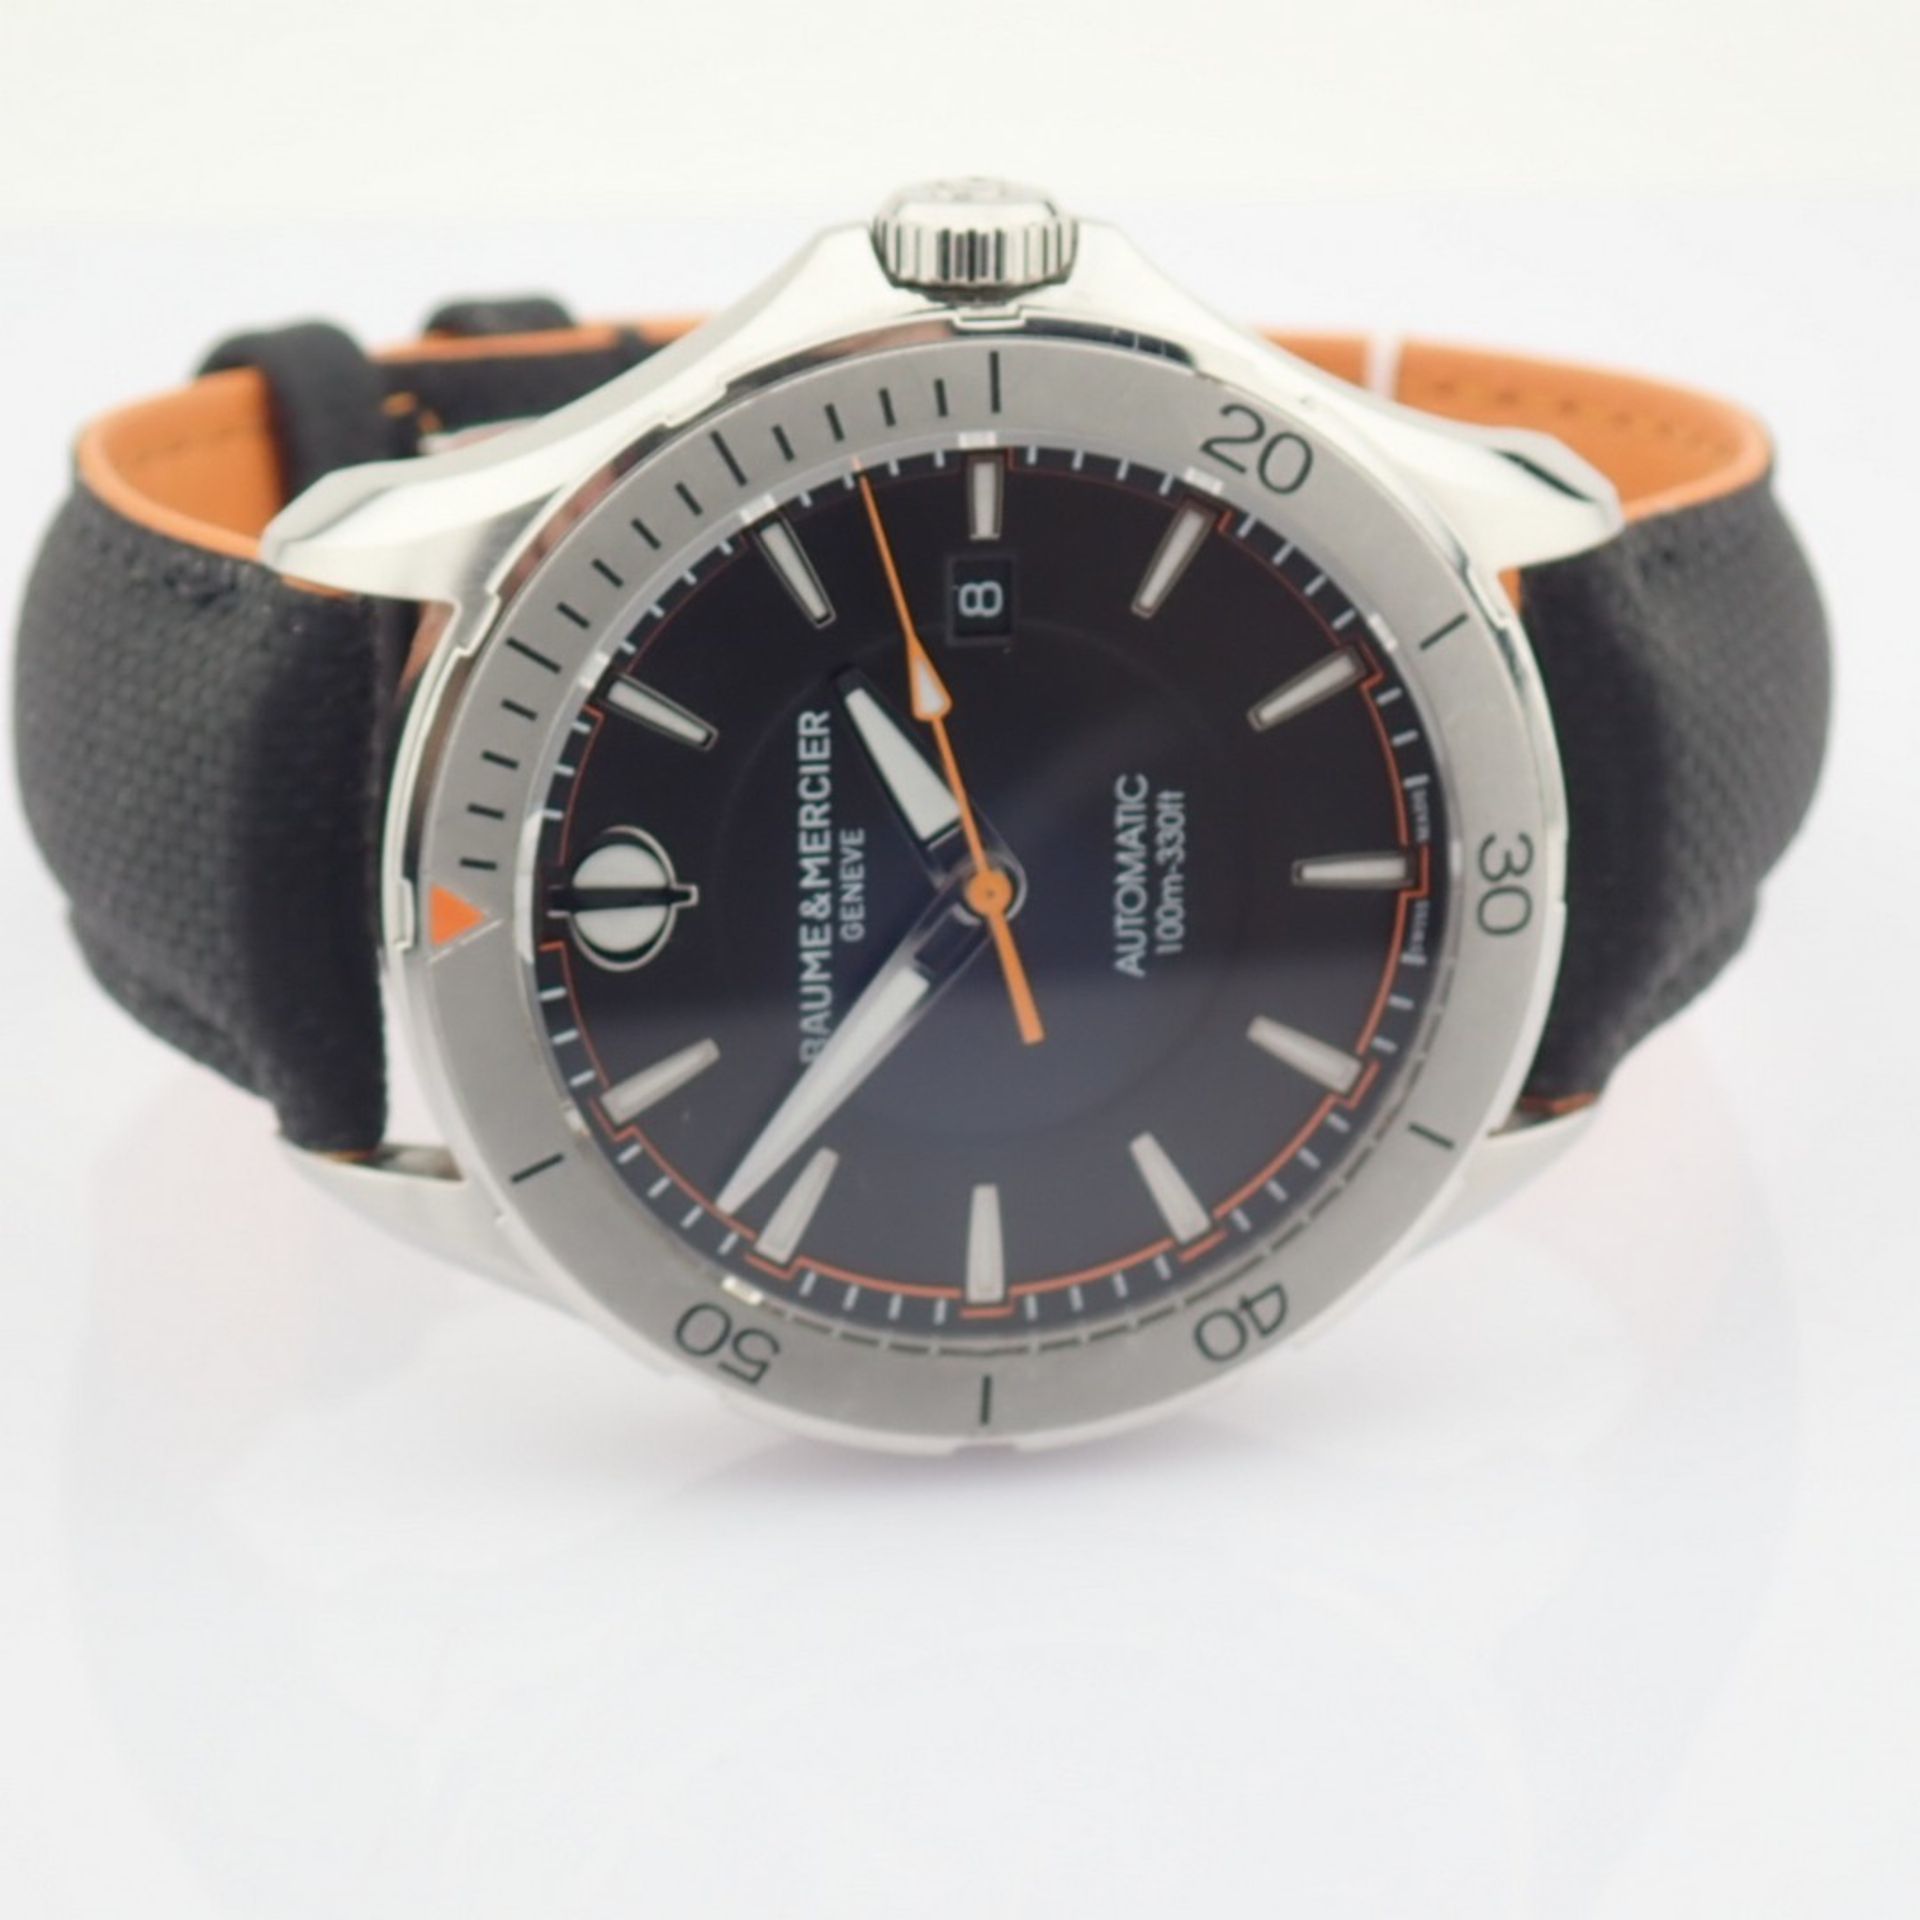 Baume & Mercier / Clifton Club - Gentlmen's Steel Wrist Watch - Image 12 of 15